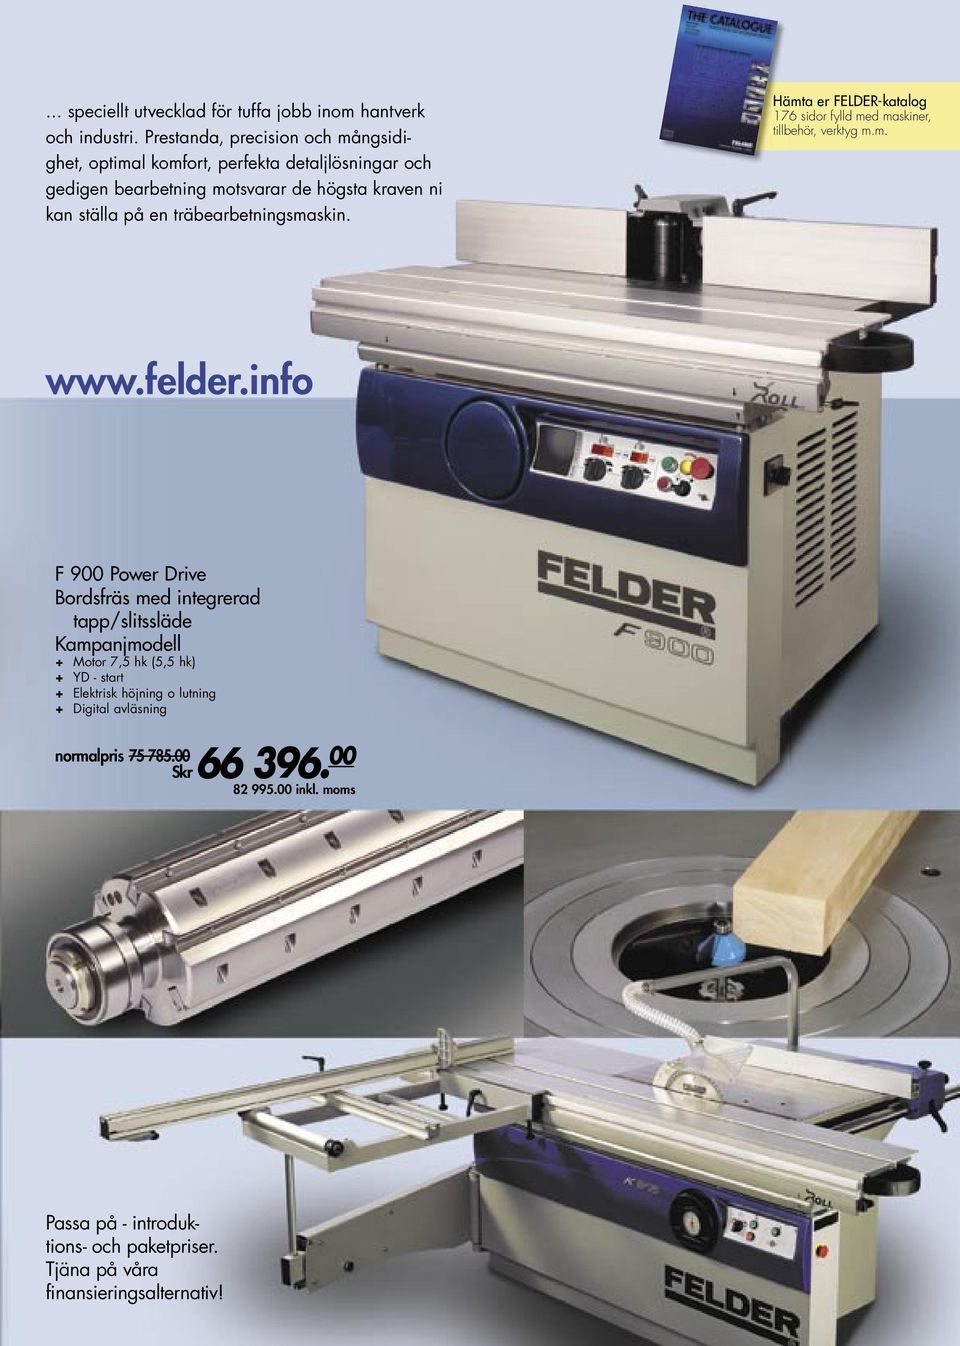 träbearbetningsmaskin. Hämta er FELDER-katalog 176 sidor fylld med maskiner, tillbehör, verktyg m.m. www.felder.